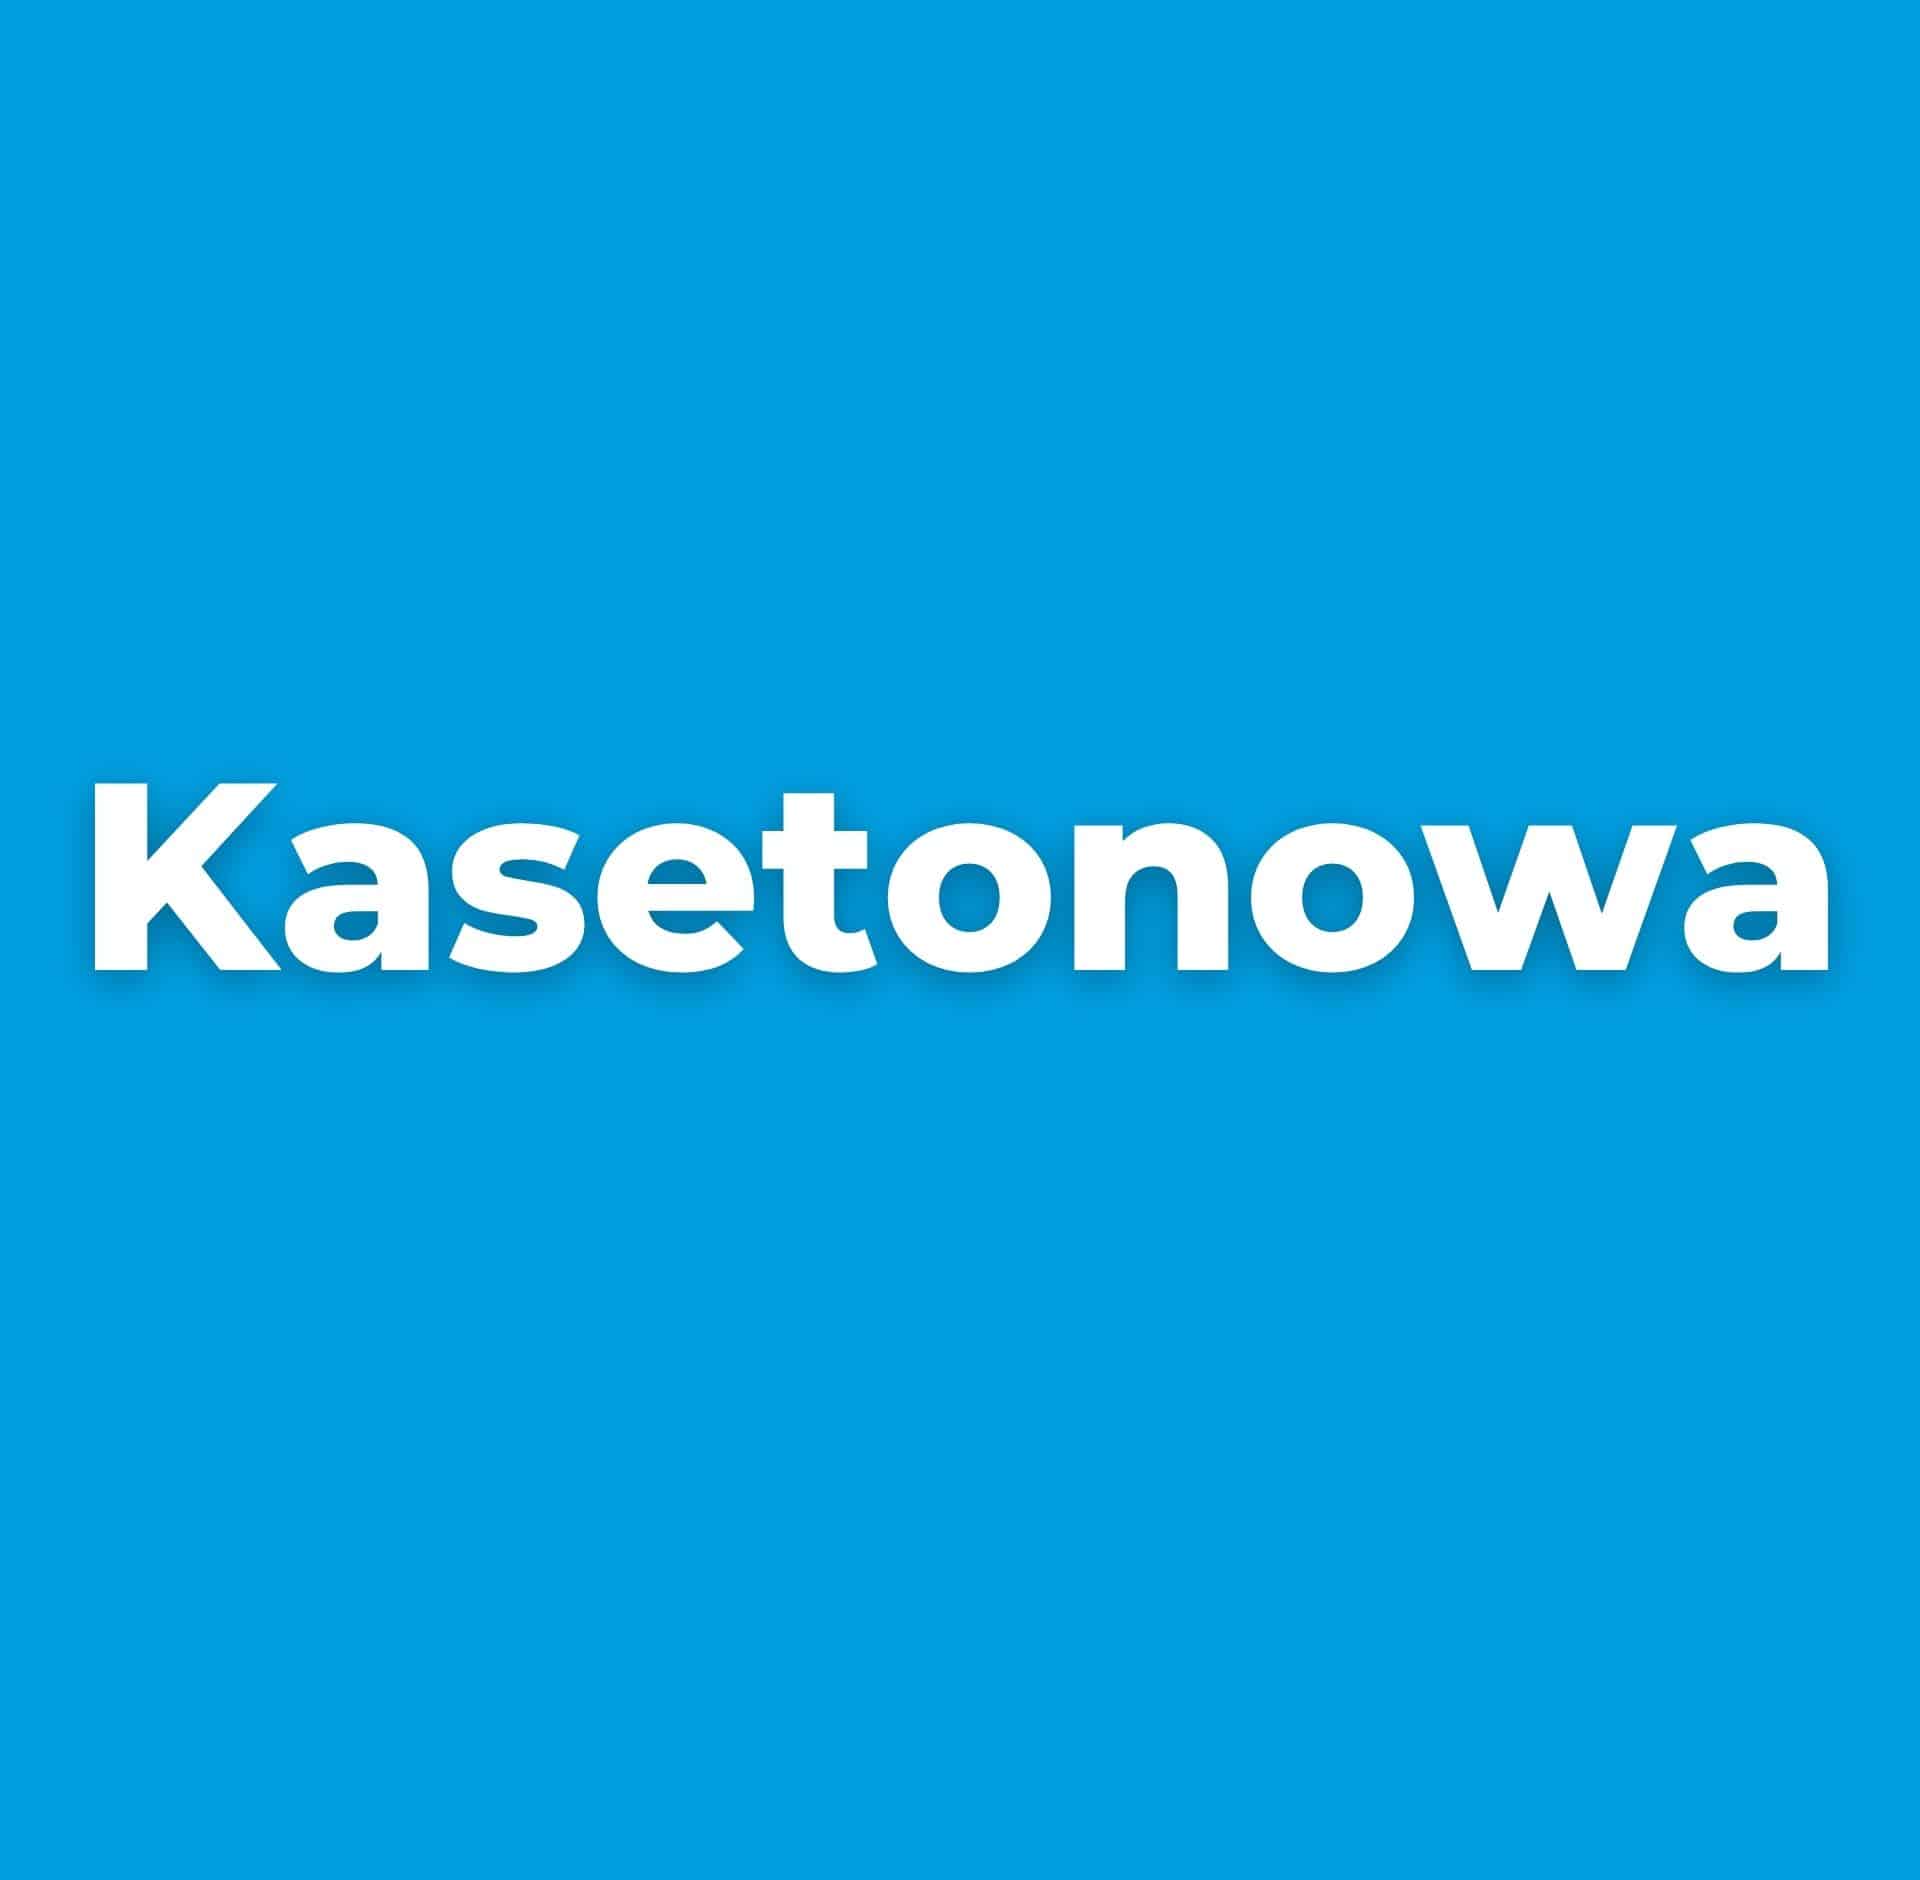 Kasetonowa